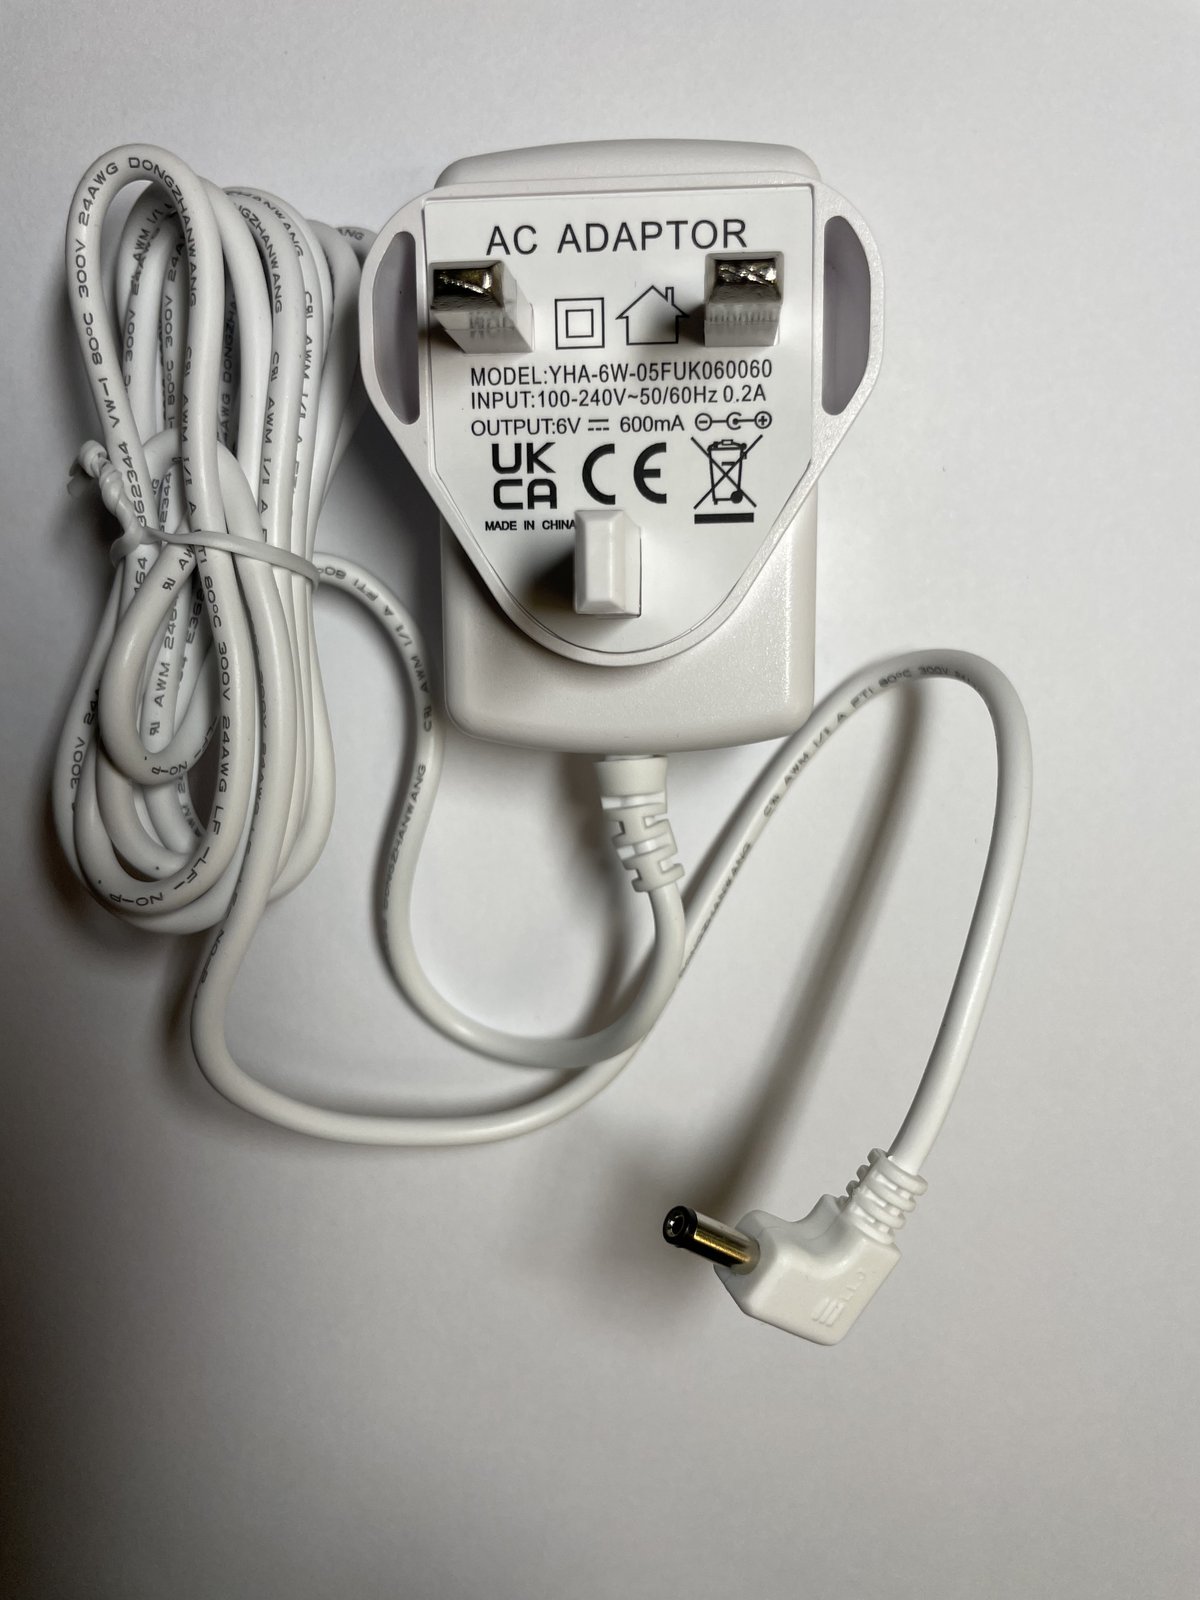 EU Plug AC/DC 6V 800mA 0.8A Power Supply Adapter Adaptor Charger